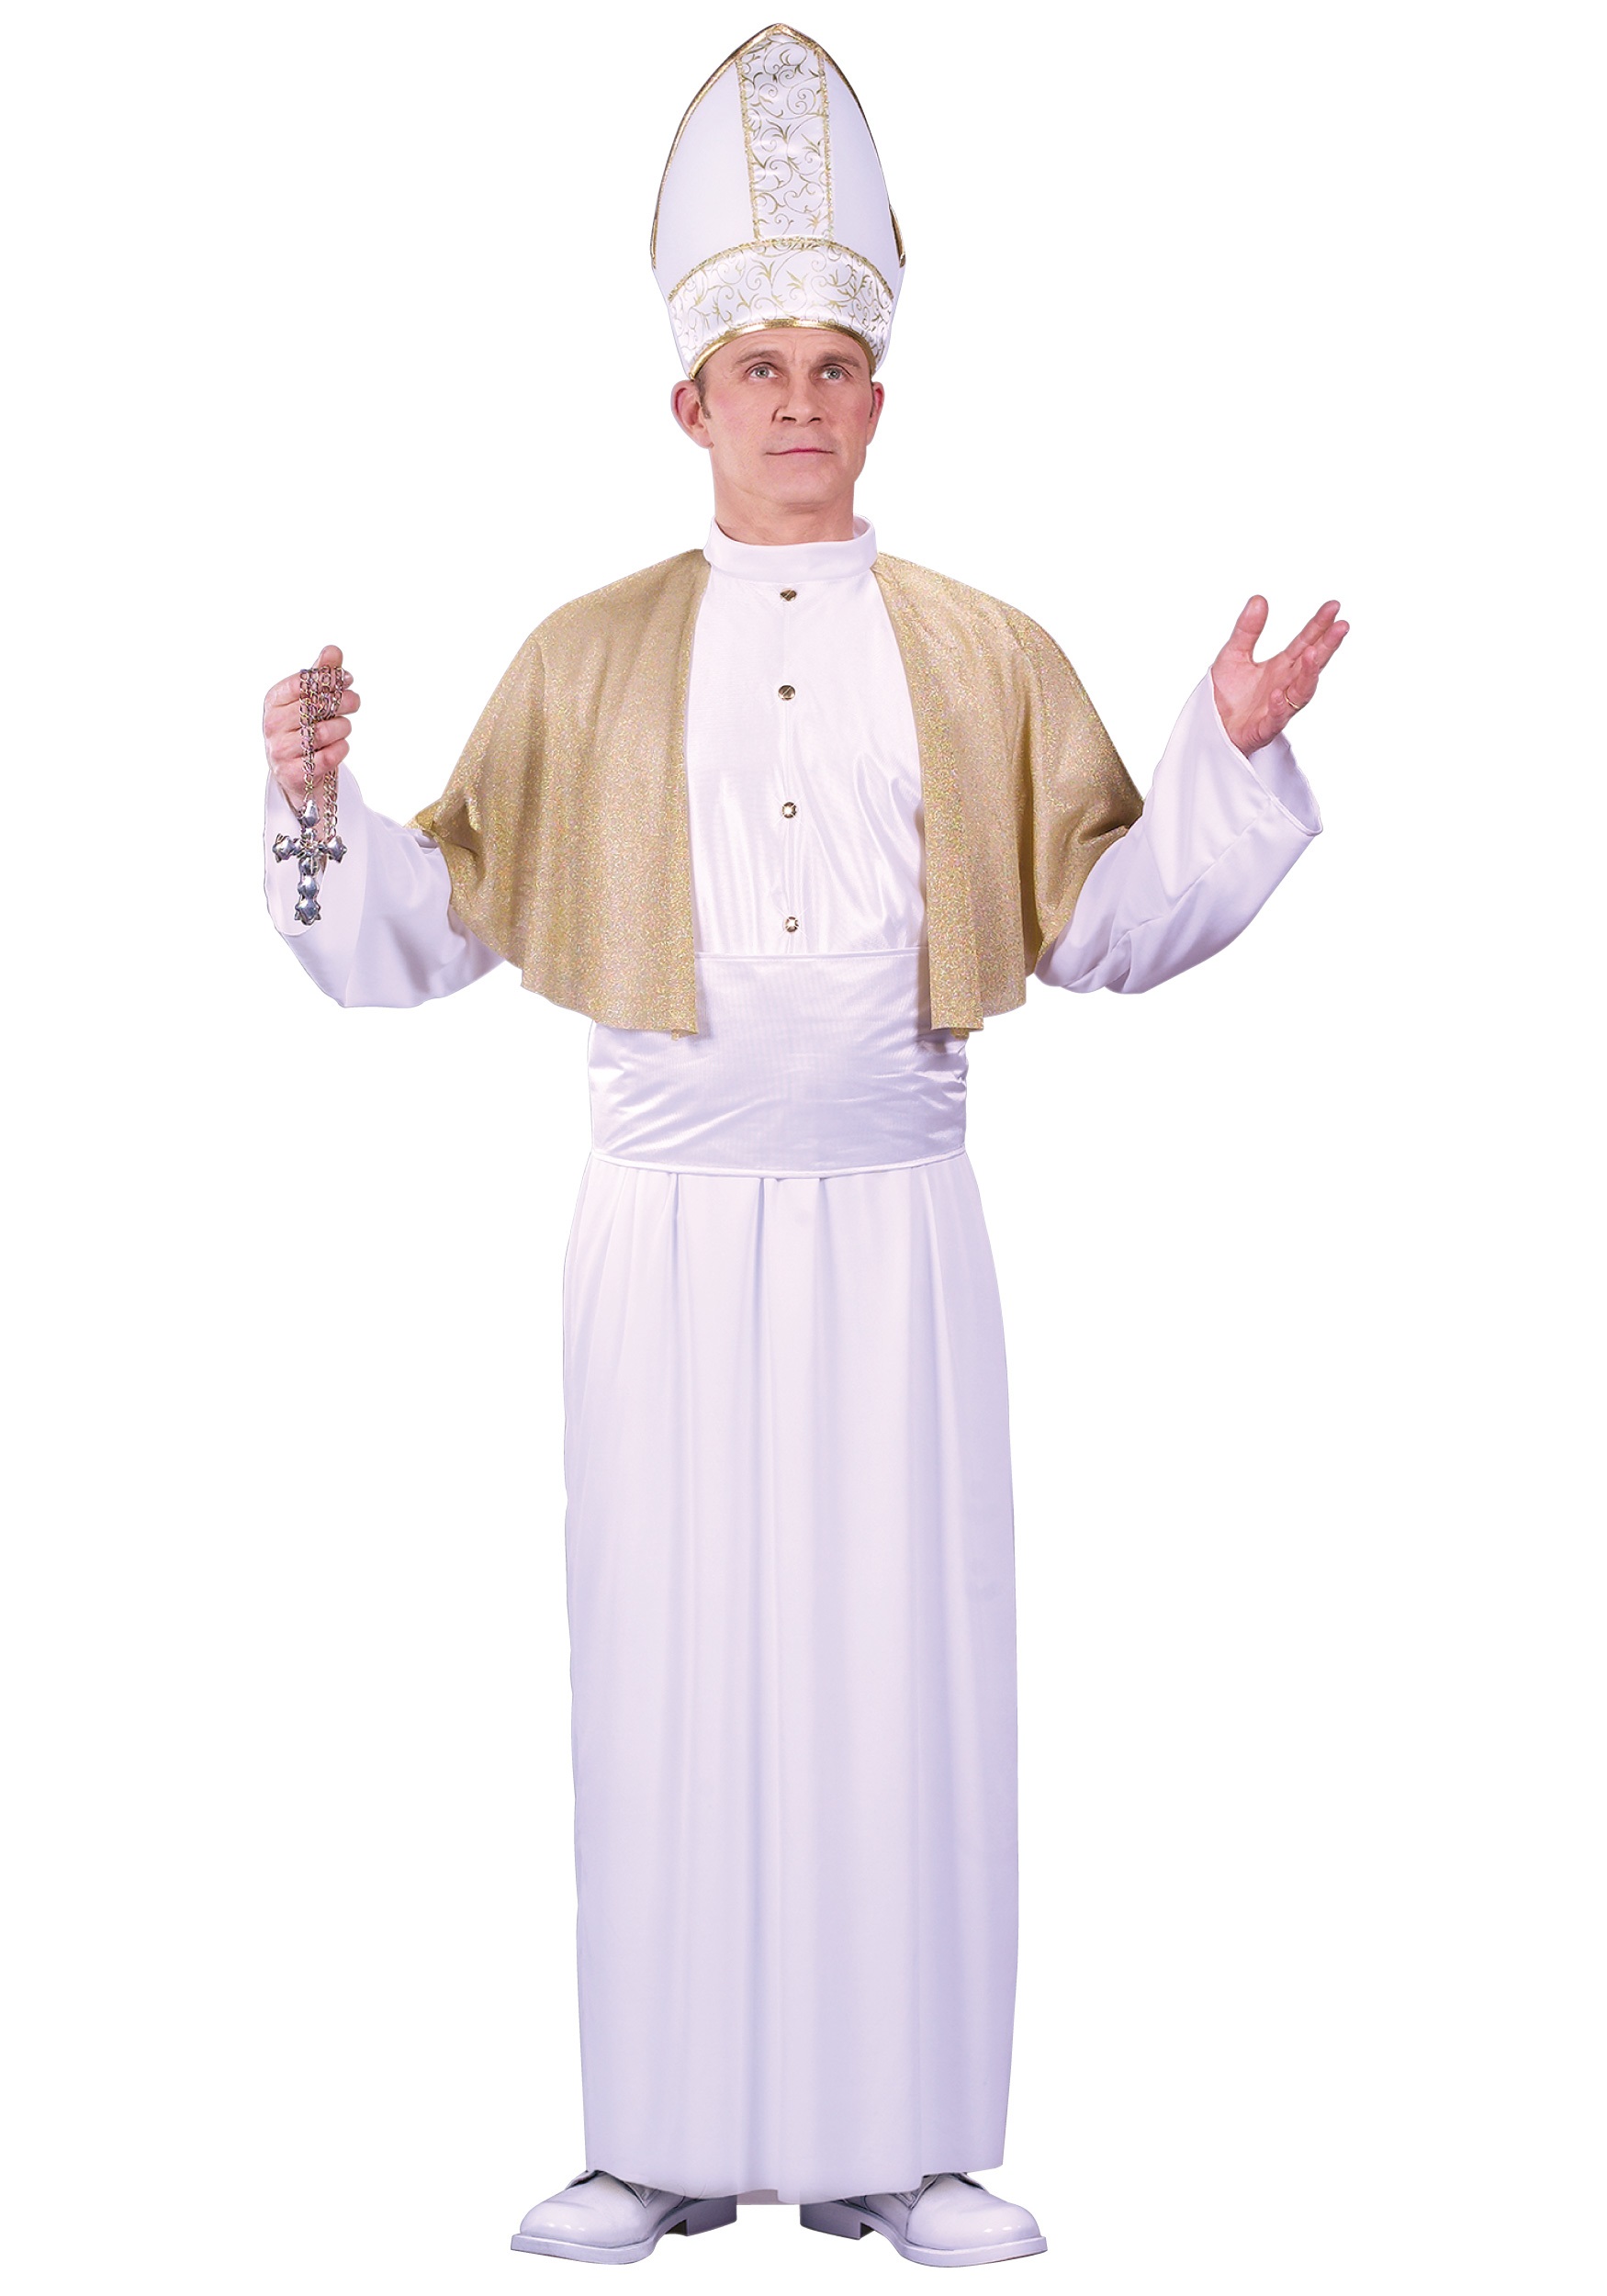 pope-costume.jpg